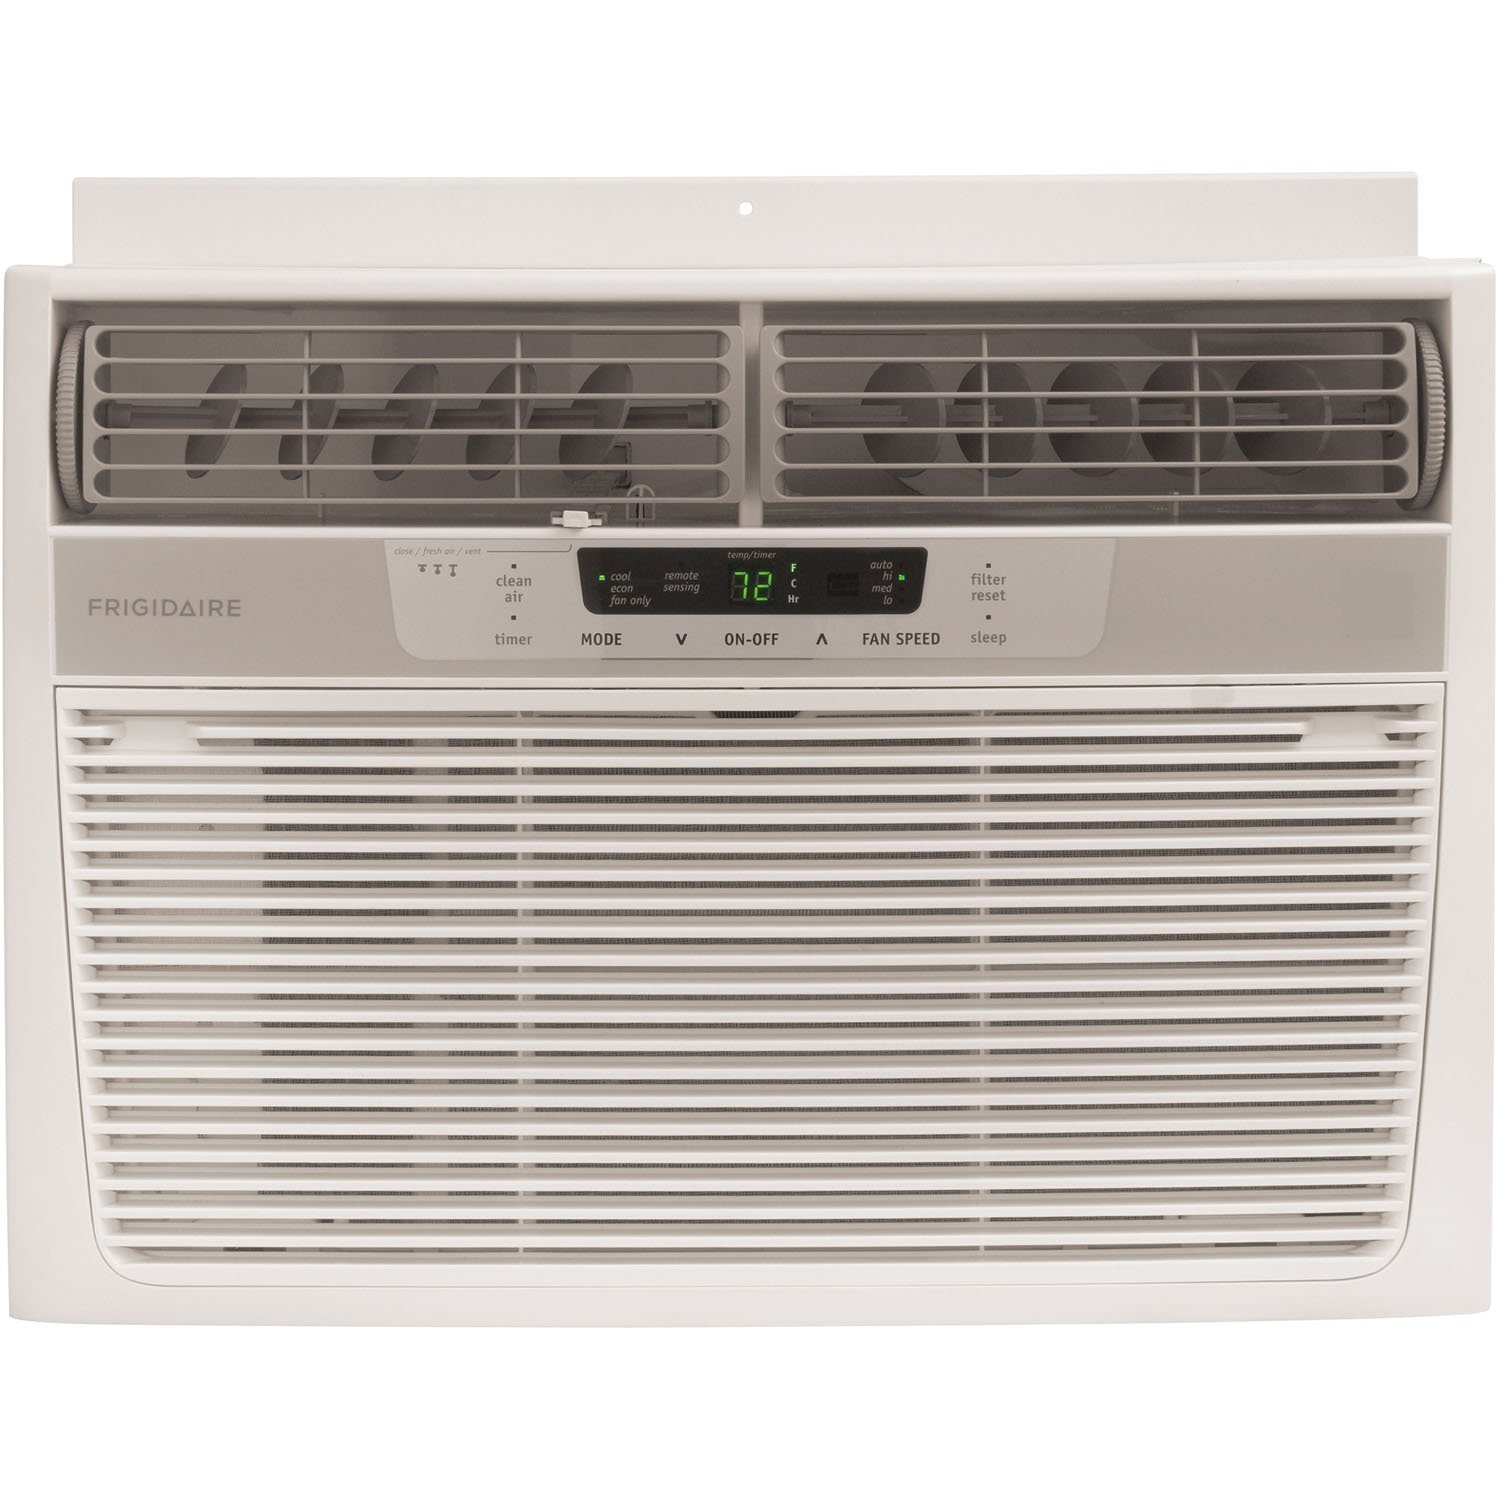 The Air Conditioner Guide: 18000 BTU Air Conditioner Reviews